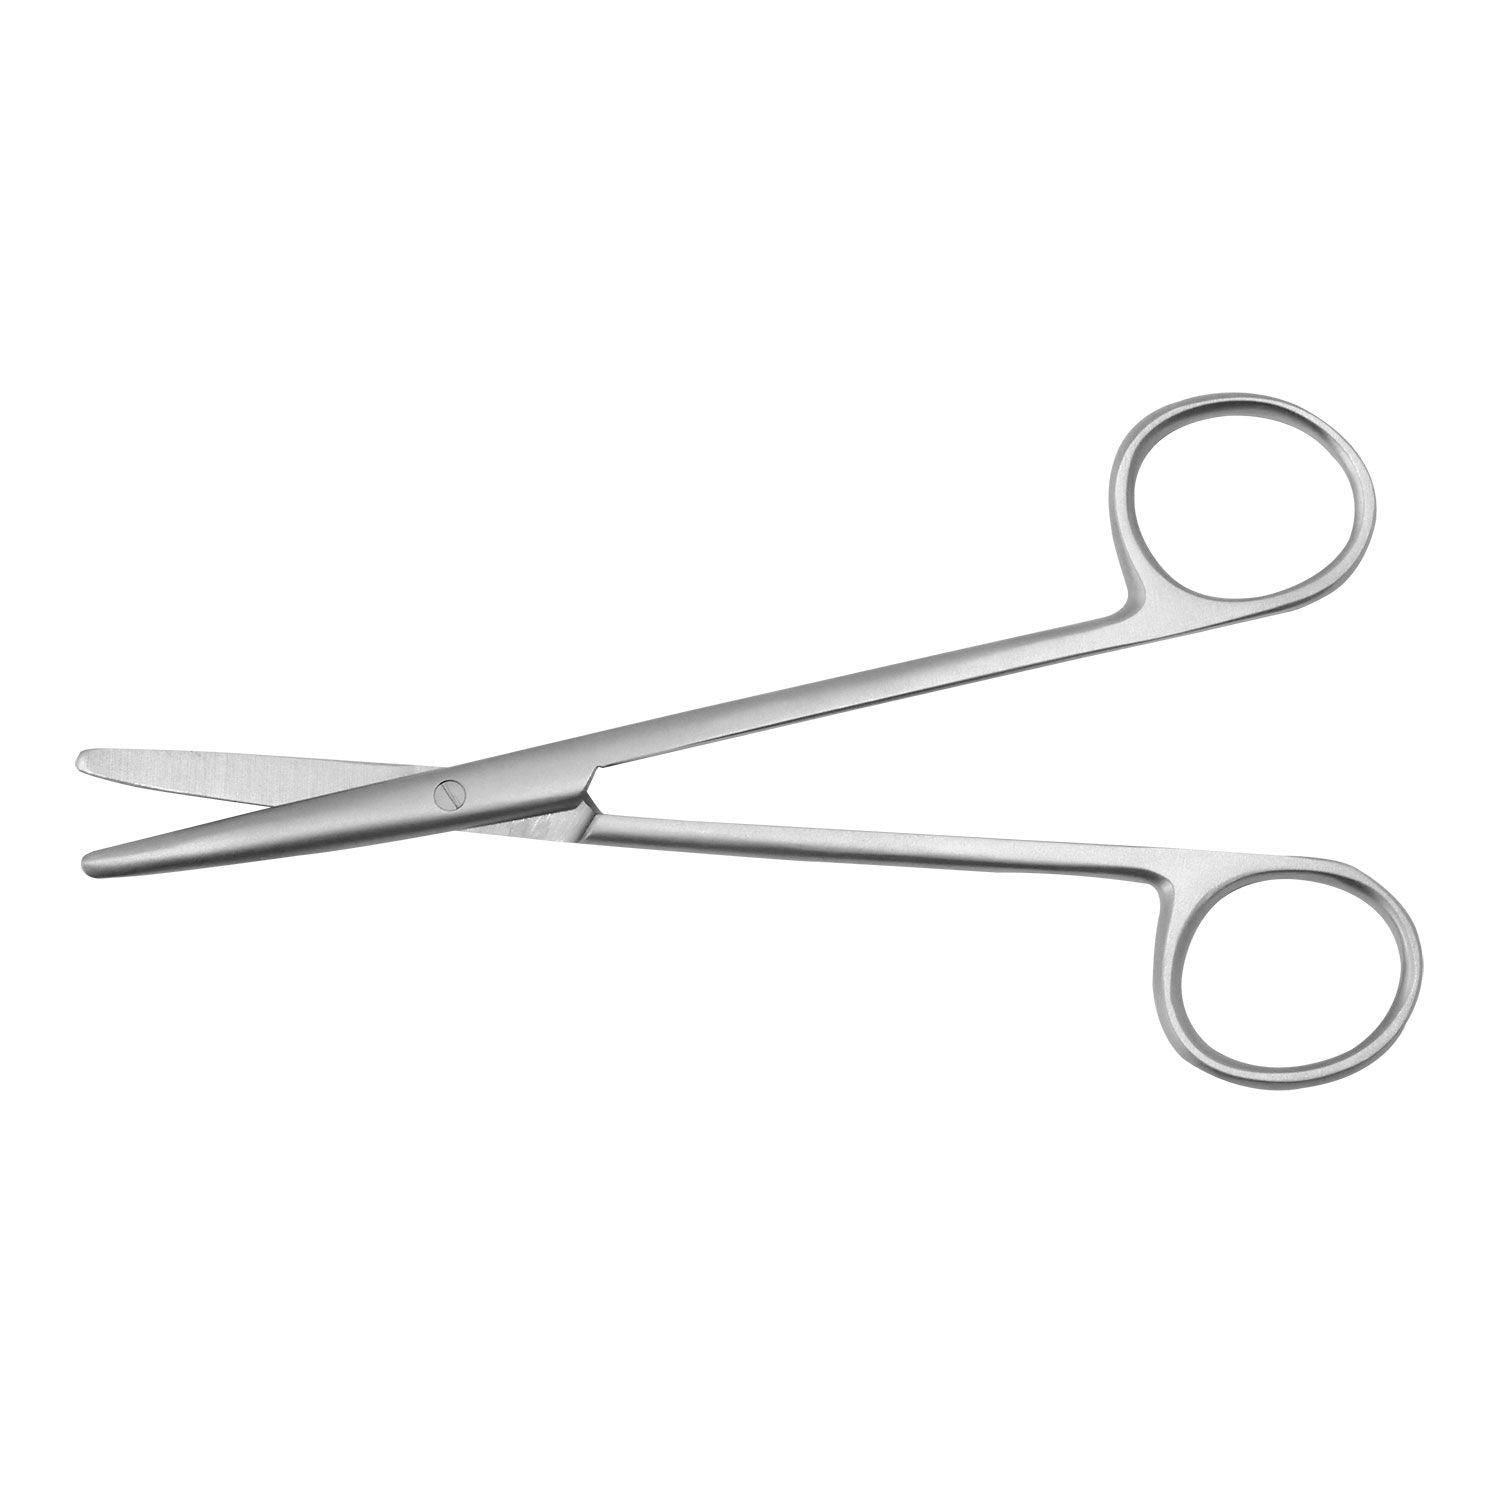 Instramed Metzenbaum Scissors | Curved | 14cm | Single